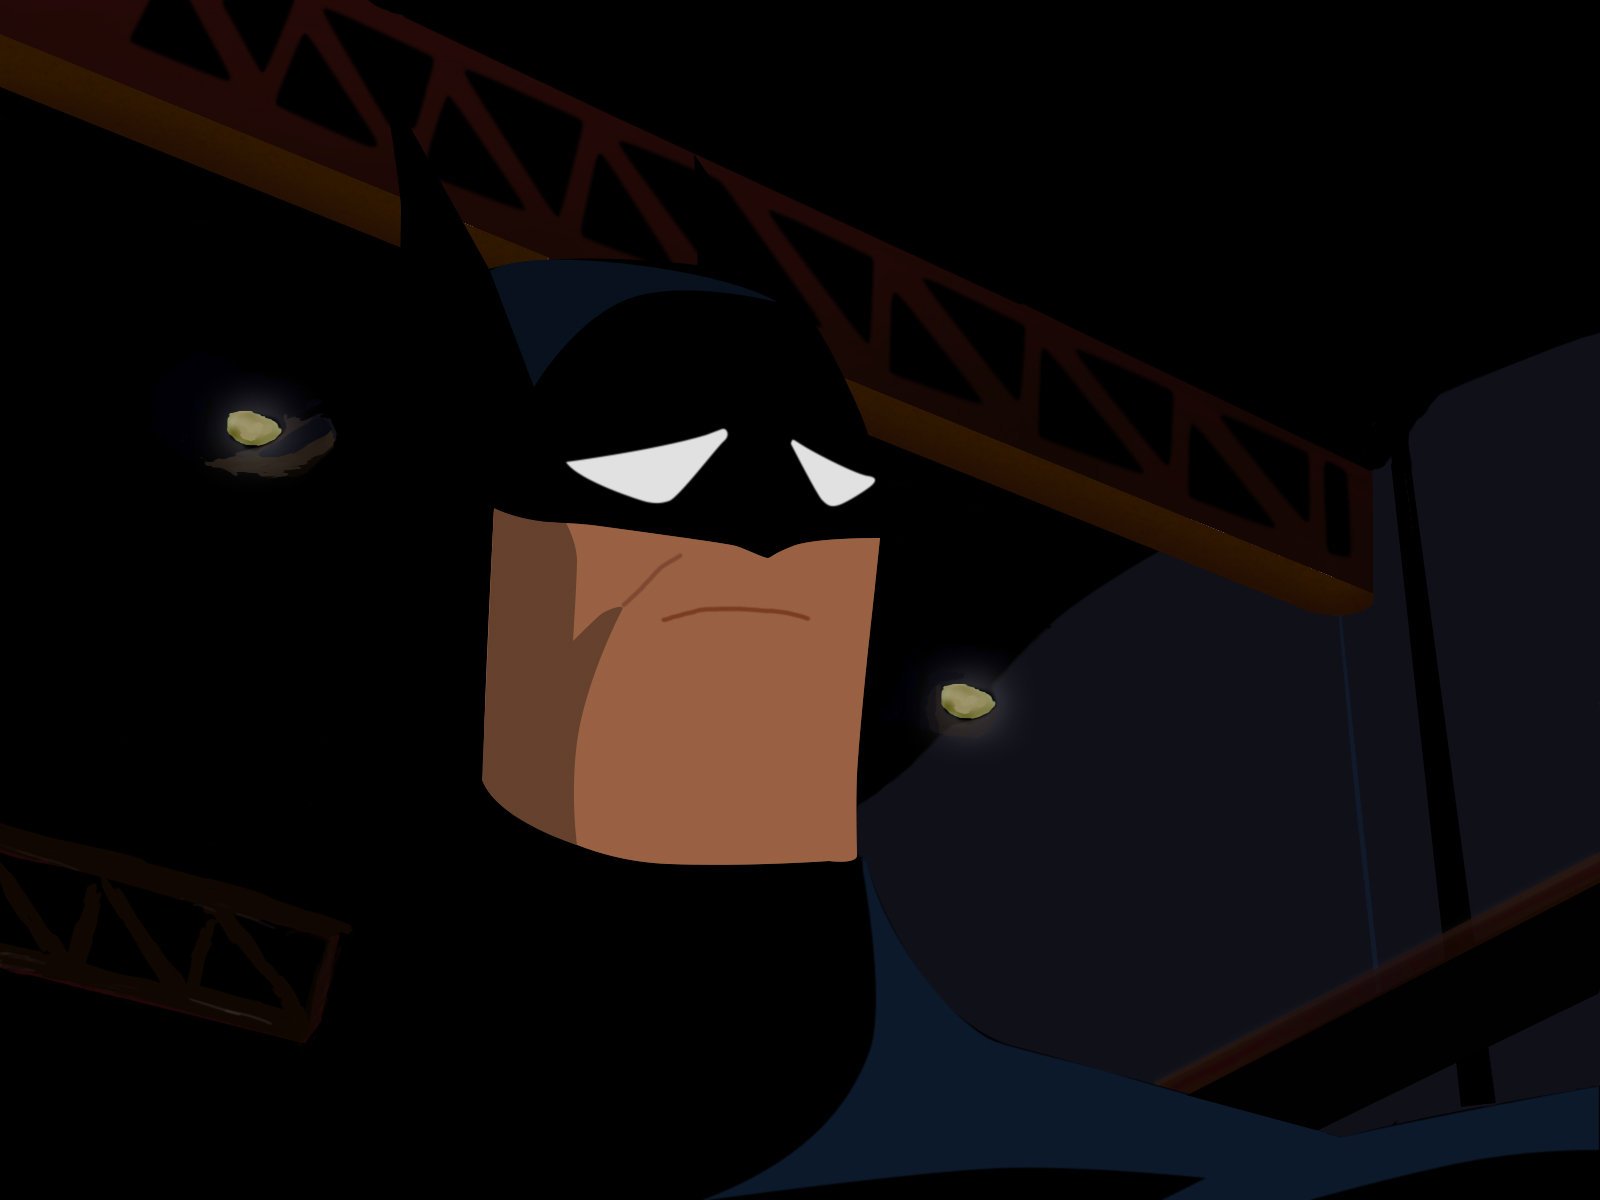 Just batman, with a sad face